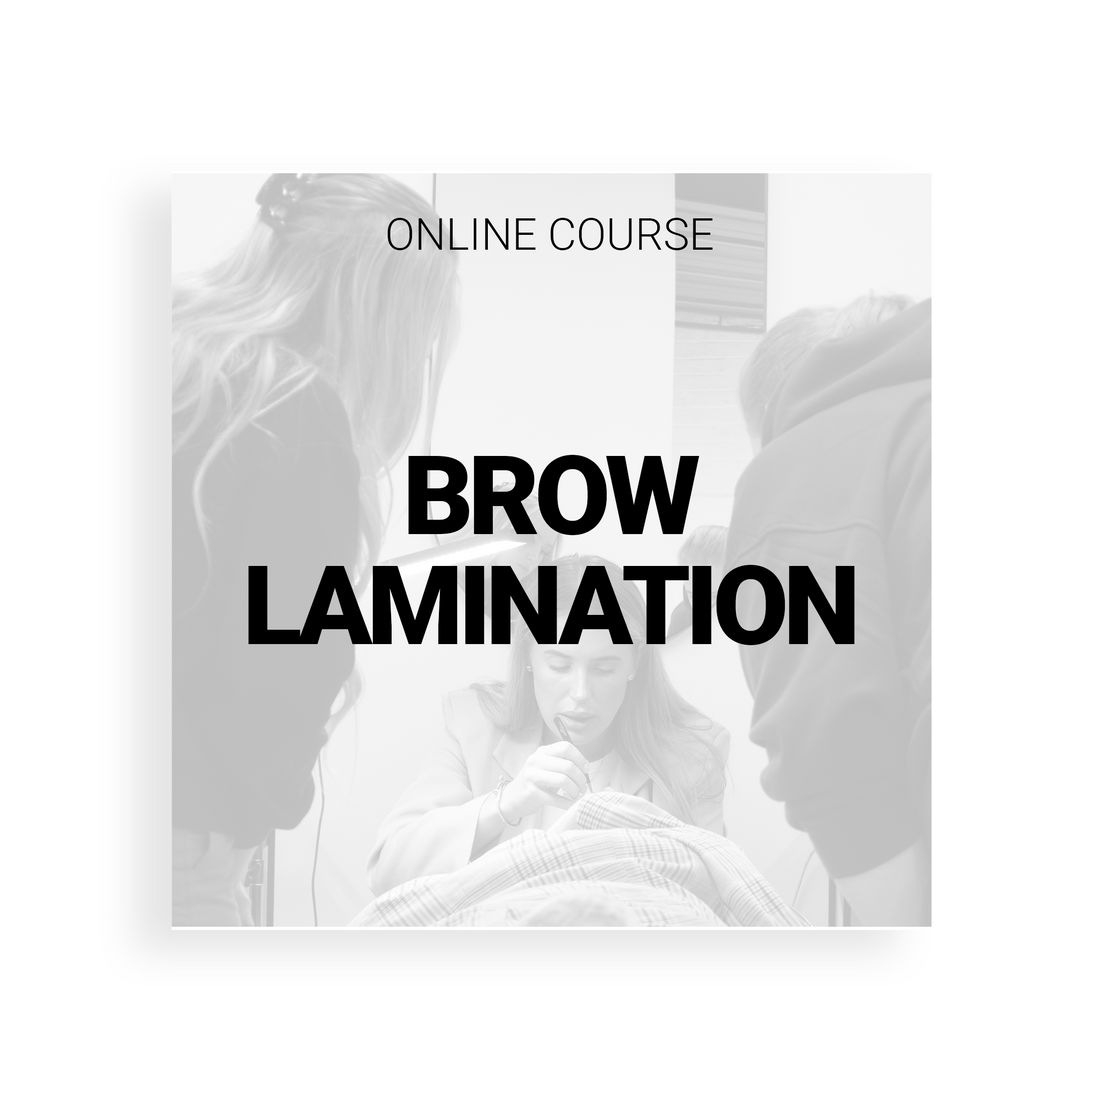 BROW LAMINATION (ONLINE)